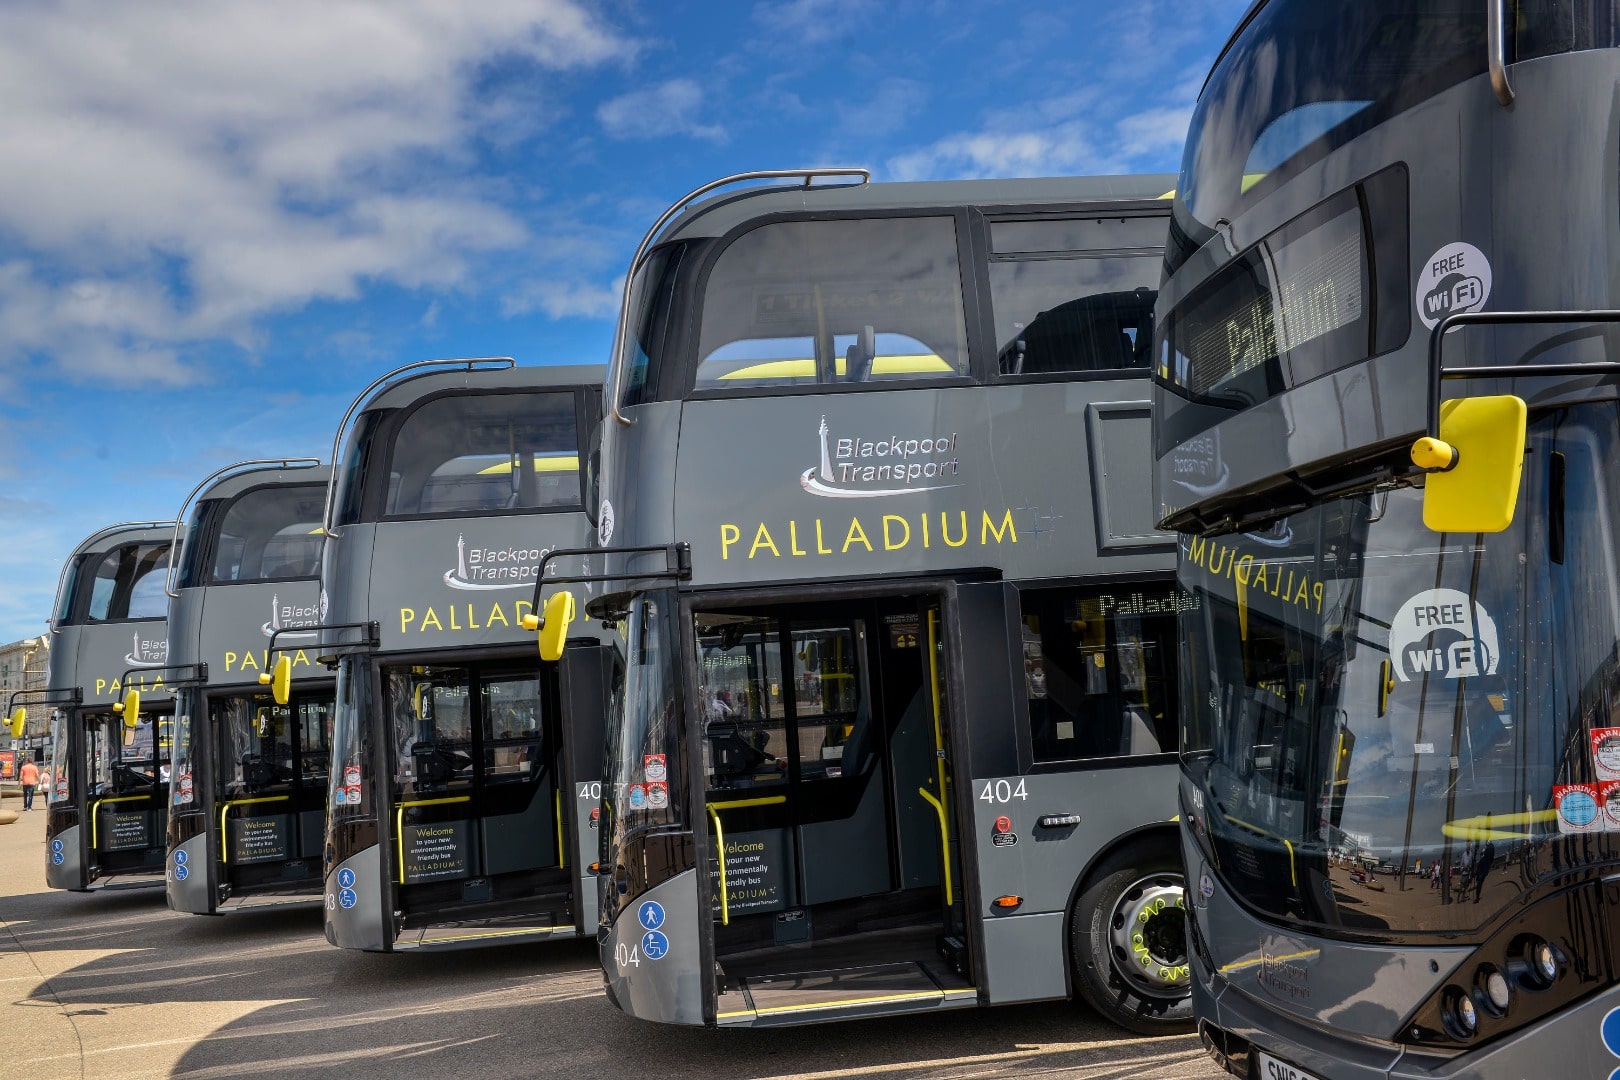 Blackpool Transport's new Palladium buses